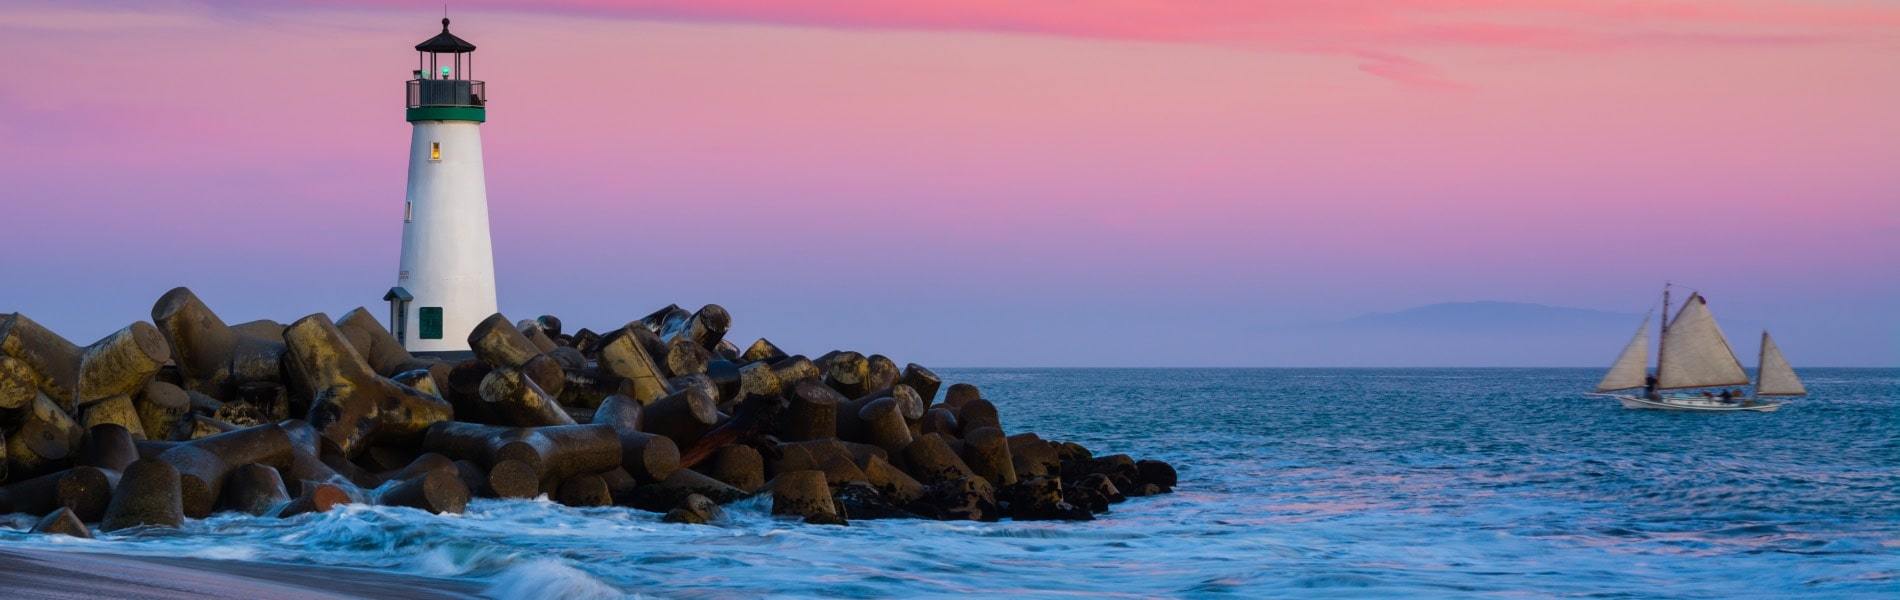 Pink sunrise over Aptos, CA waterfront